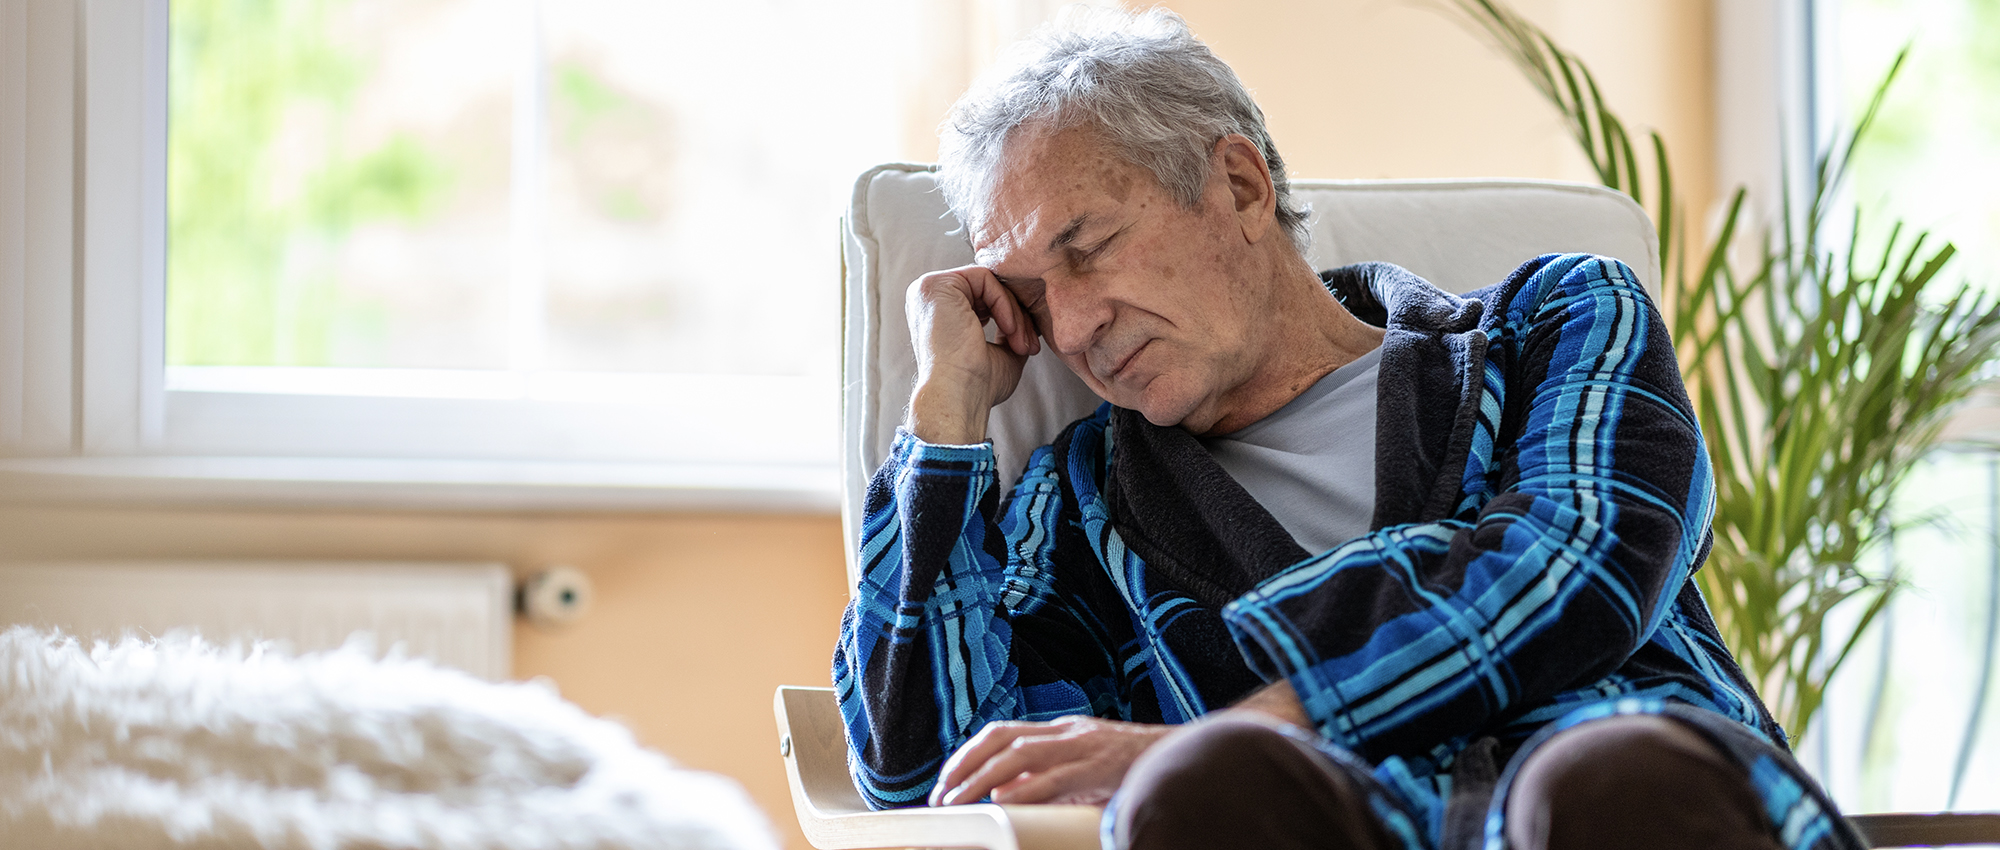 Elder person falls asleep in chair alone in a nursing home.